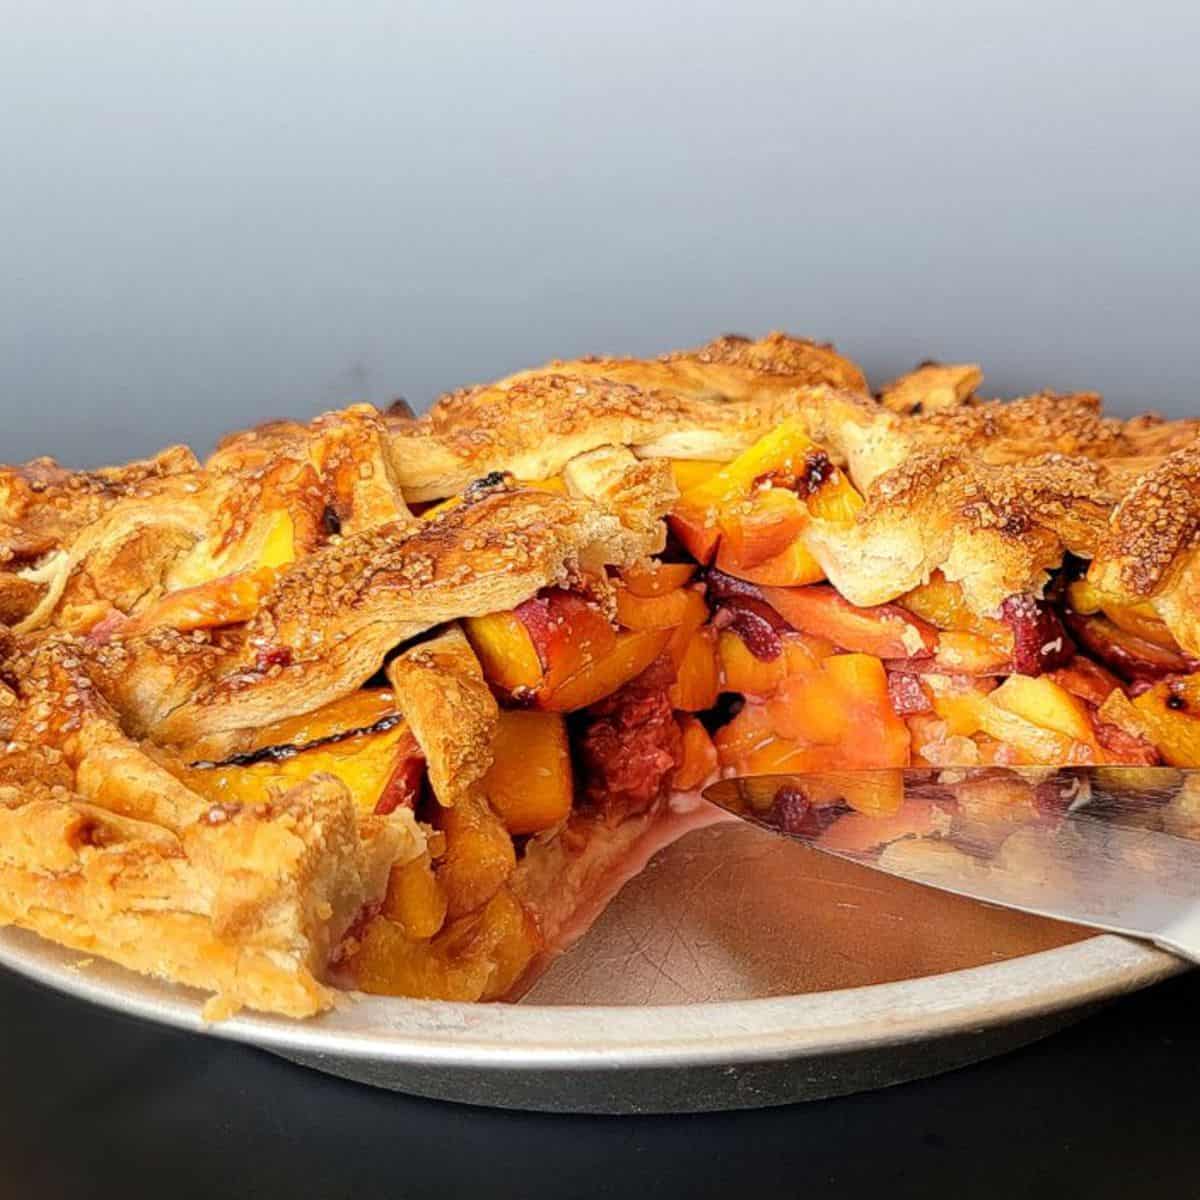 inside of peach and raspberry pie